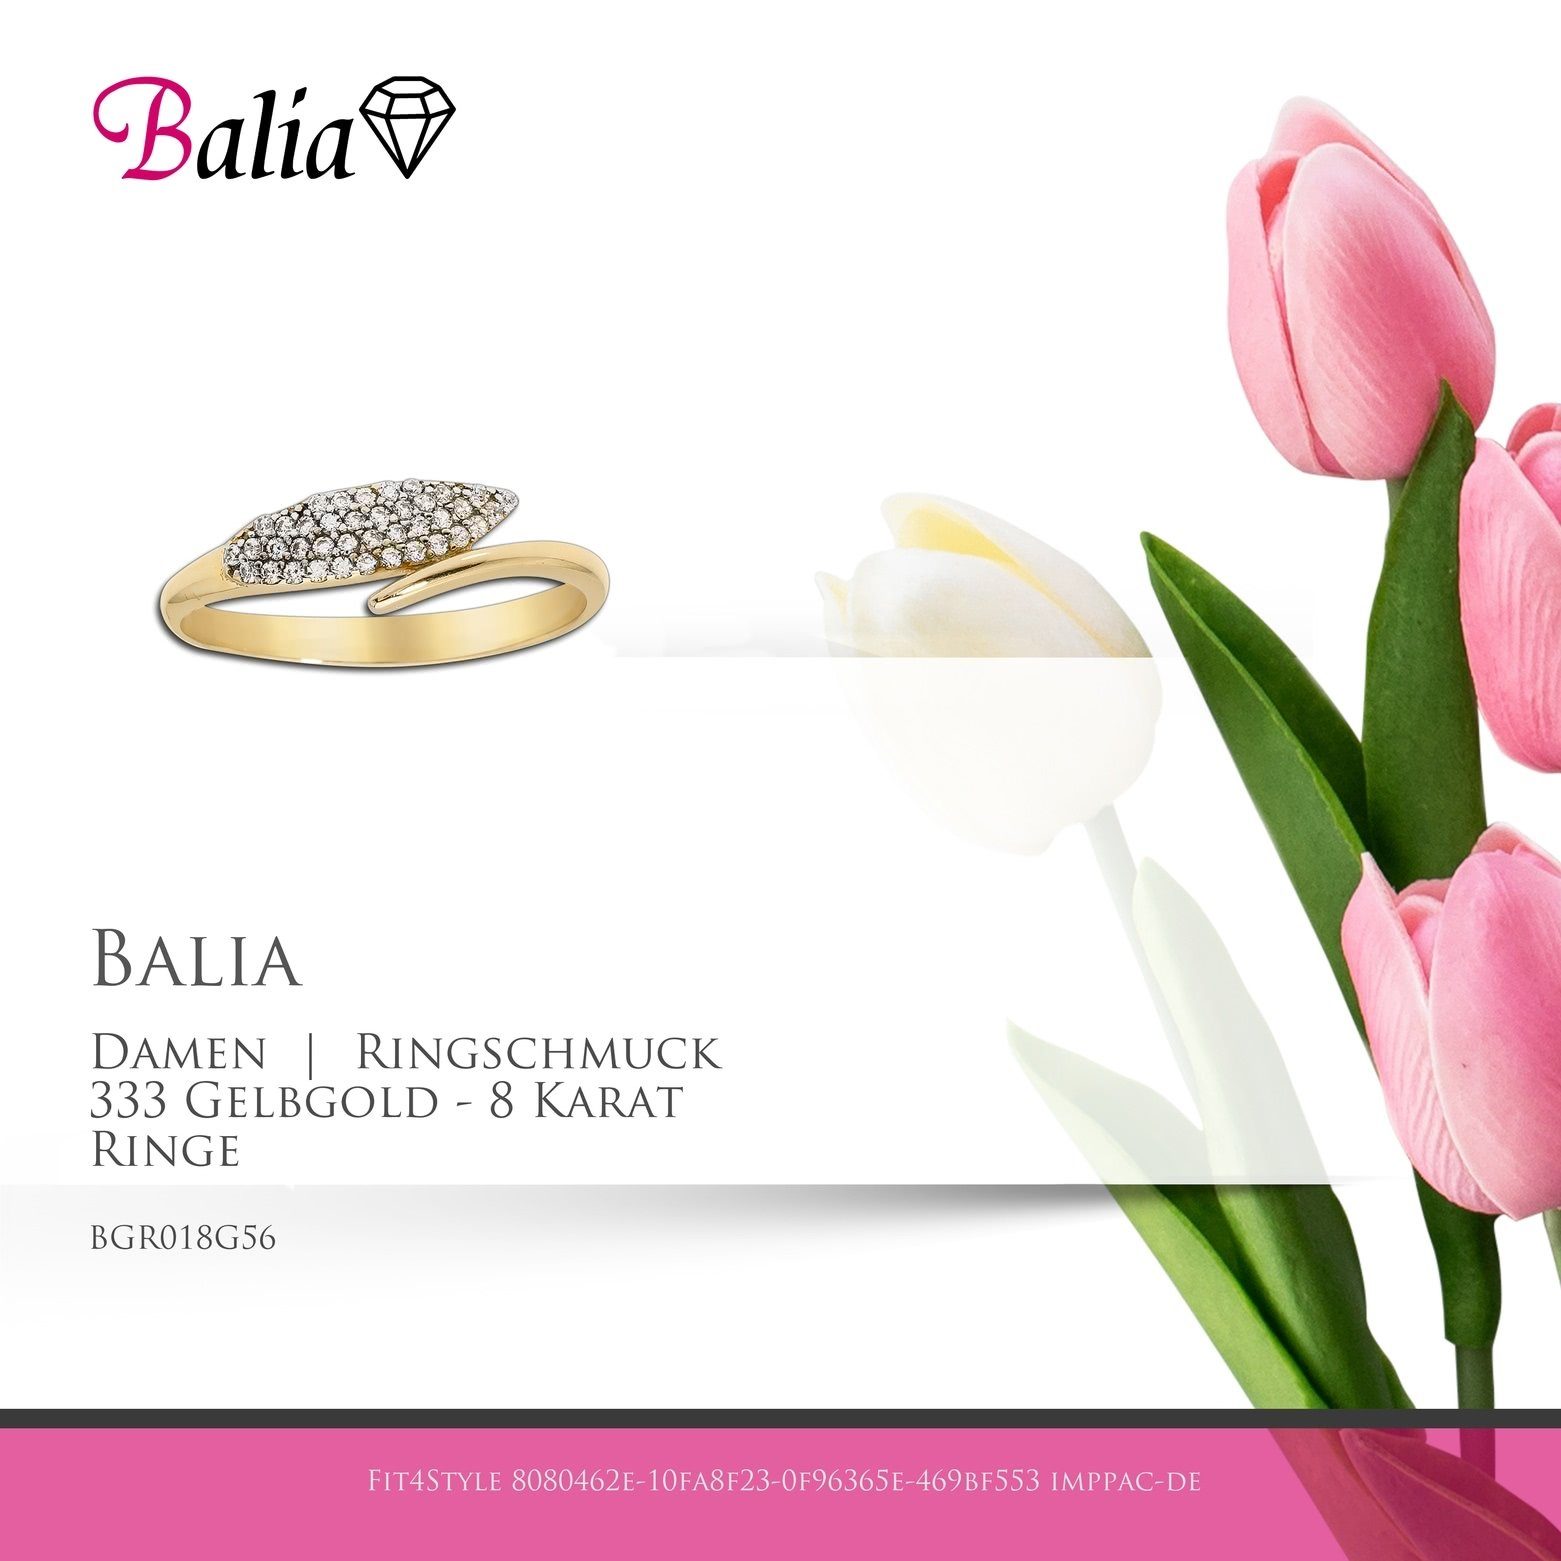 Ringe, Gelbgold Balia (17,8) Blatt, Karat Balia Ring 8Kt - Damen Damen 8 56 Blatt Gr.56 Goldring Gold (Fingerring), 333